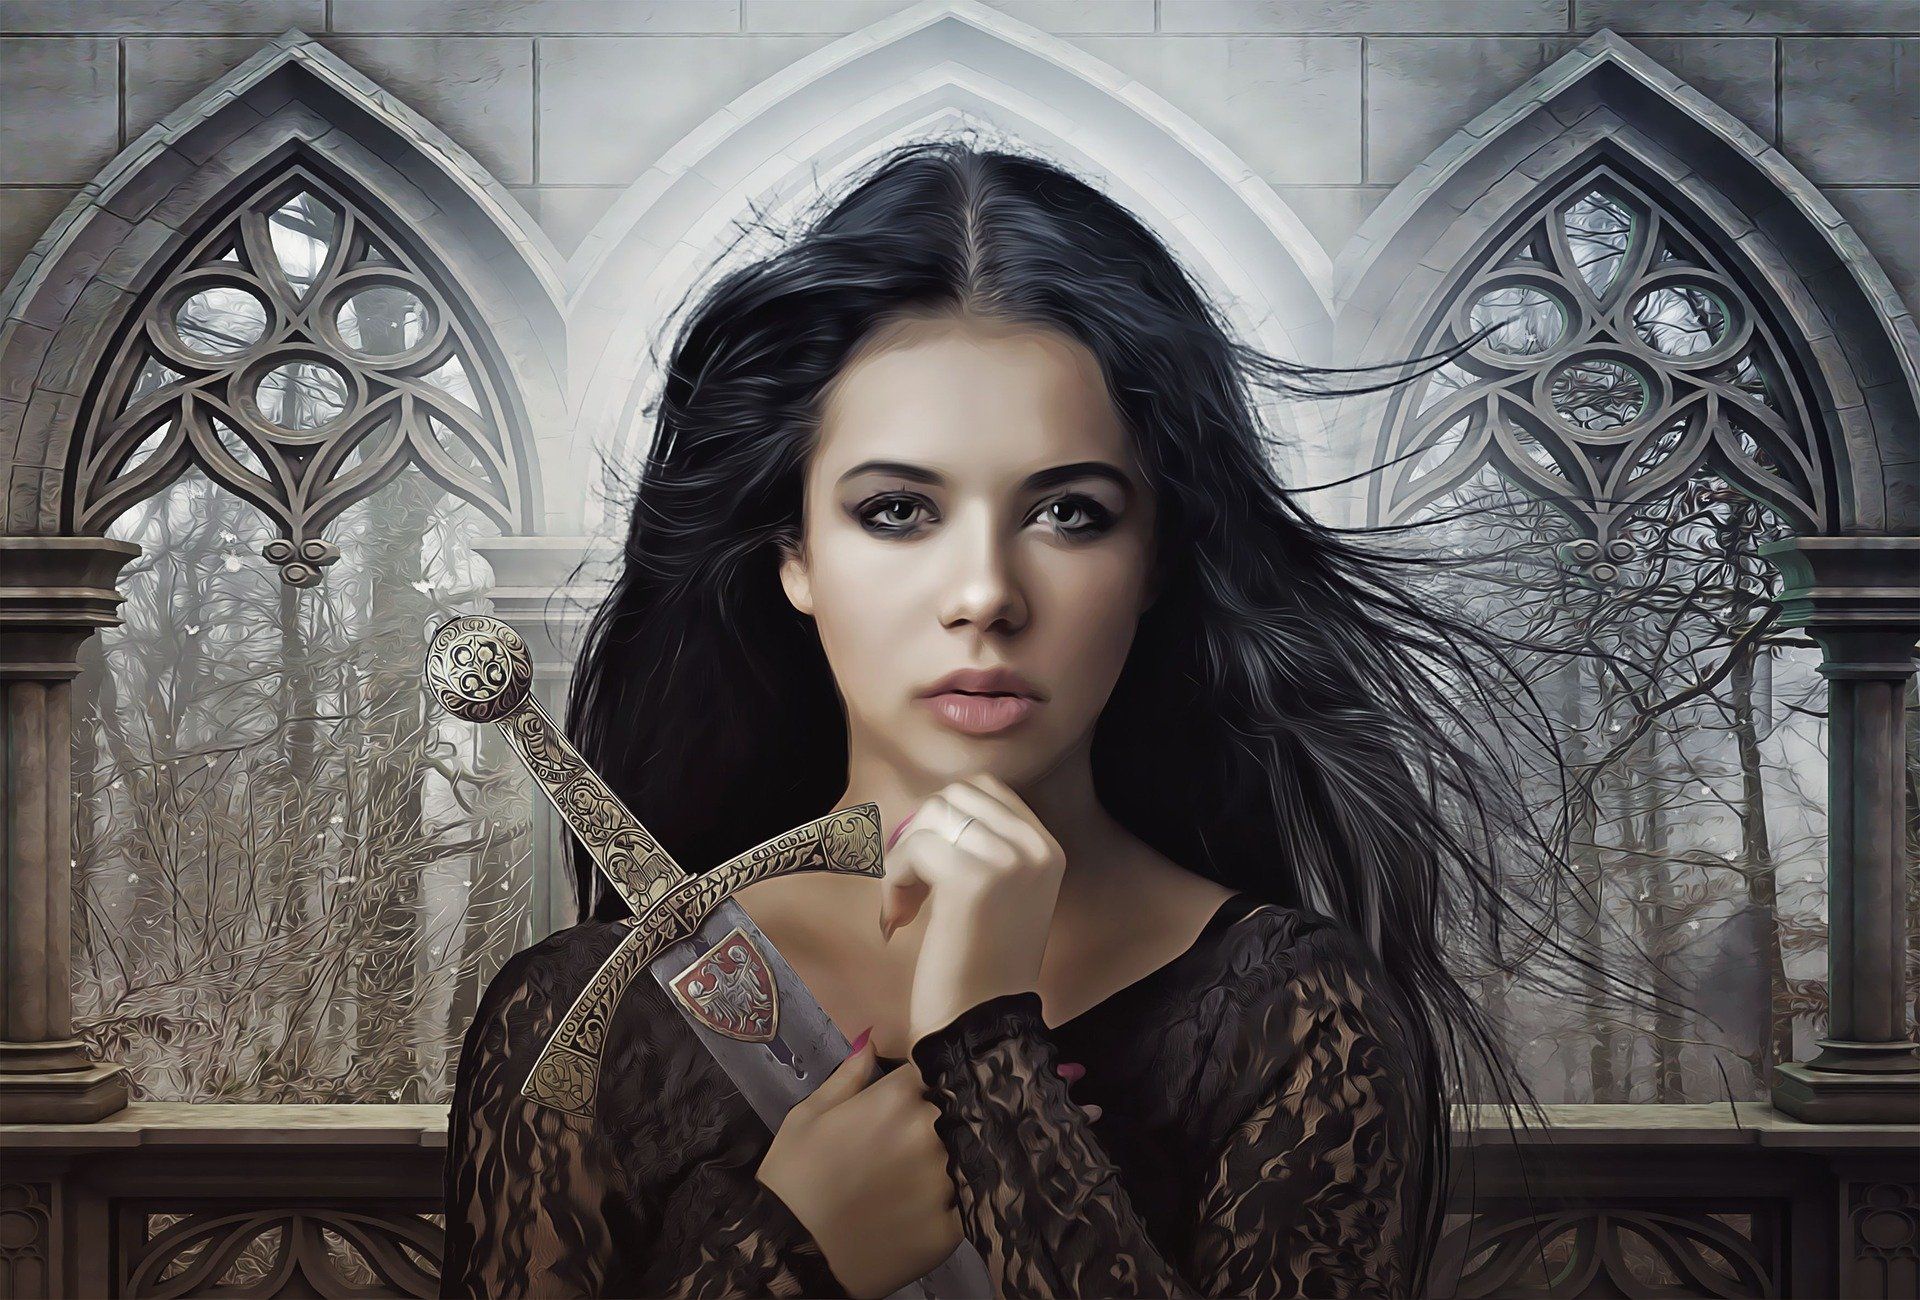 dark gothic lady sword emdieval long hair brunette castle monastery magic legend